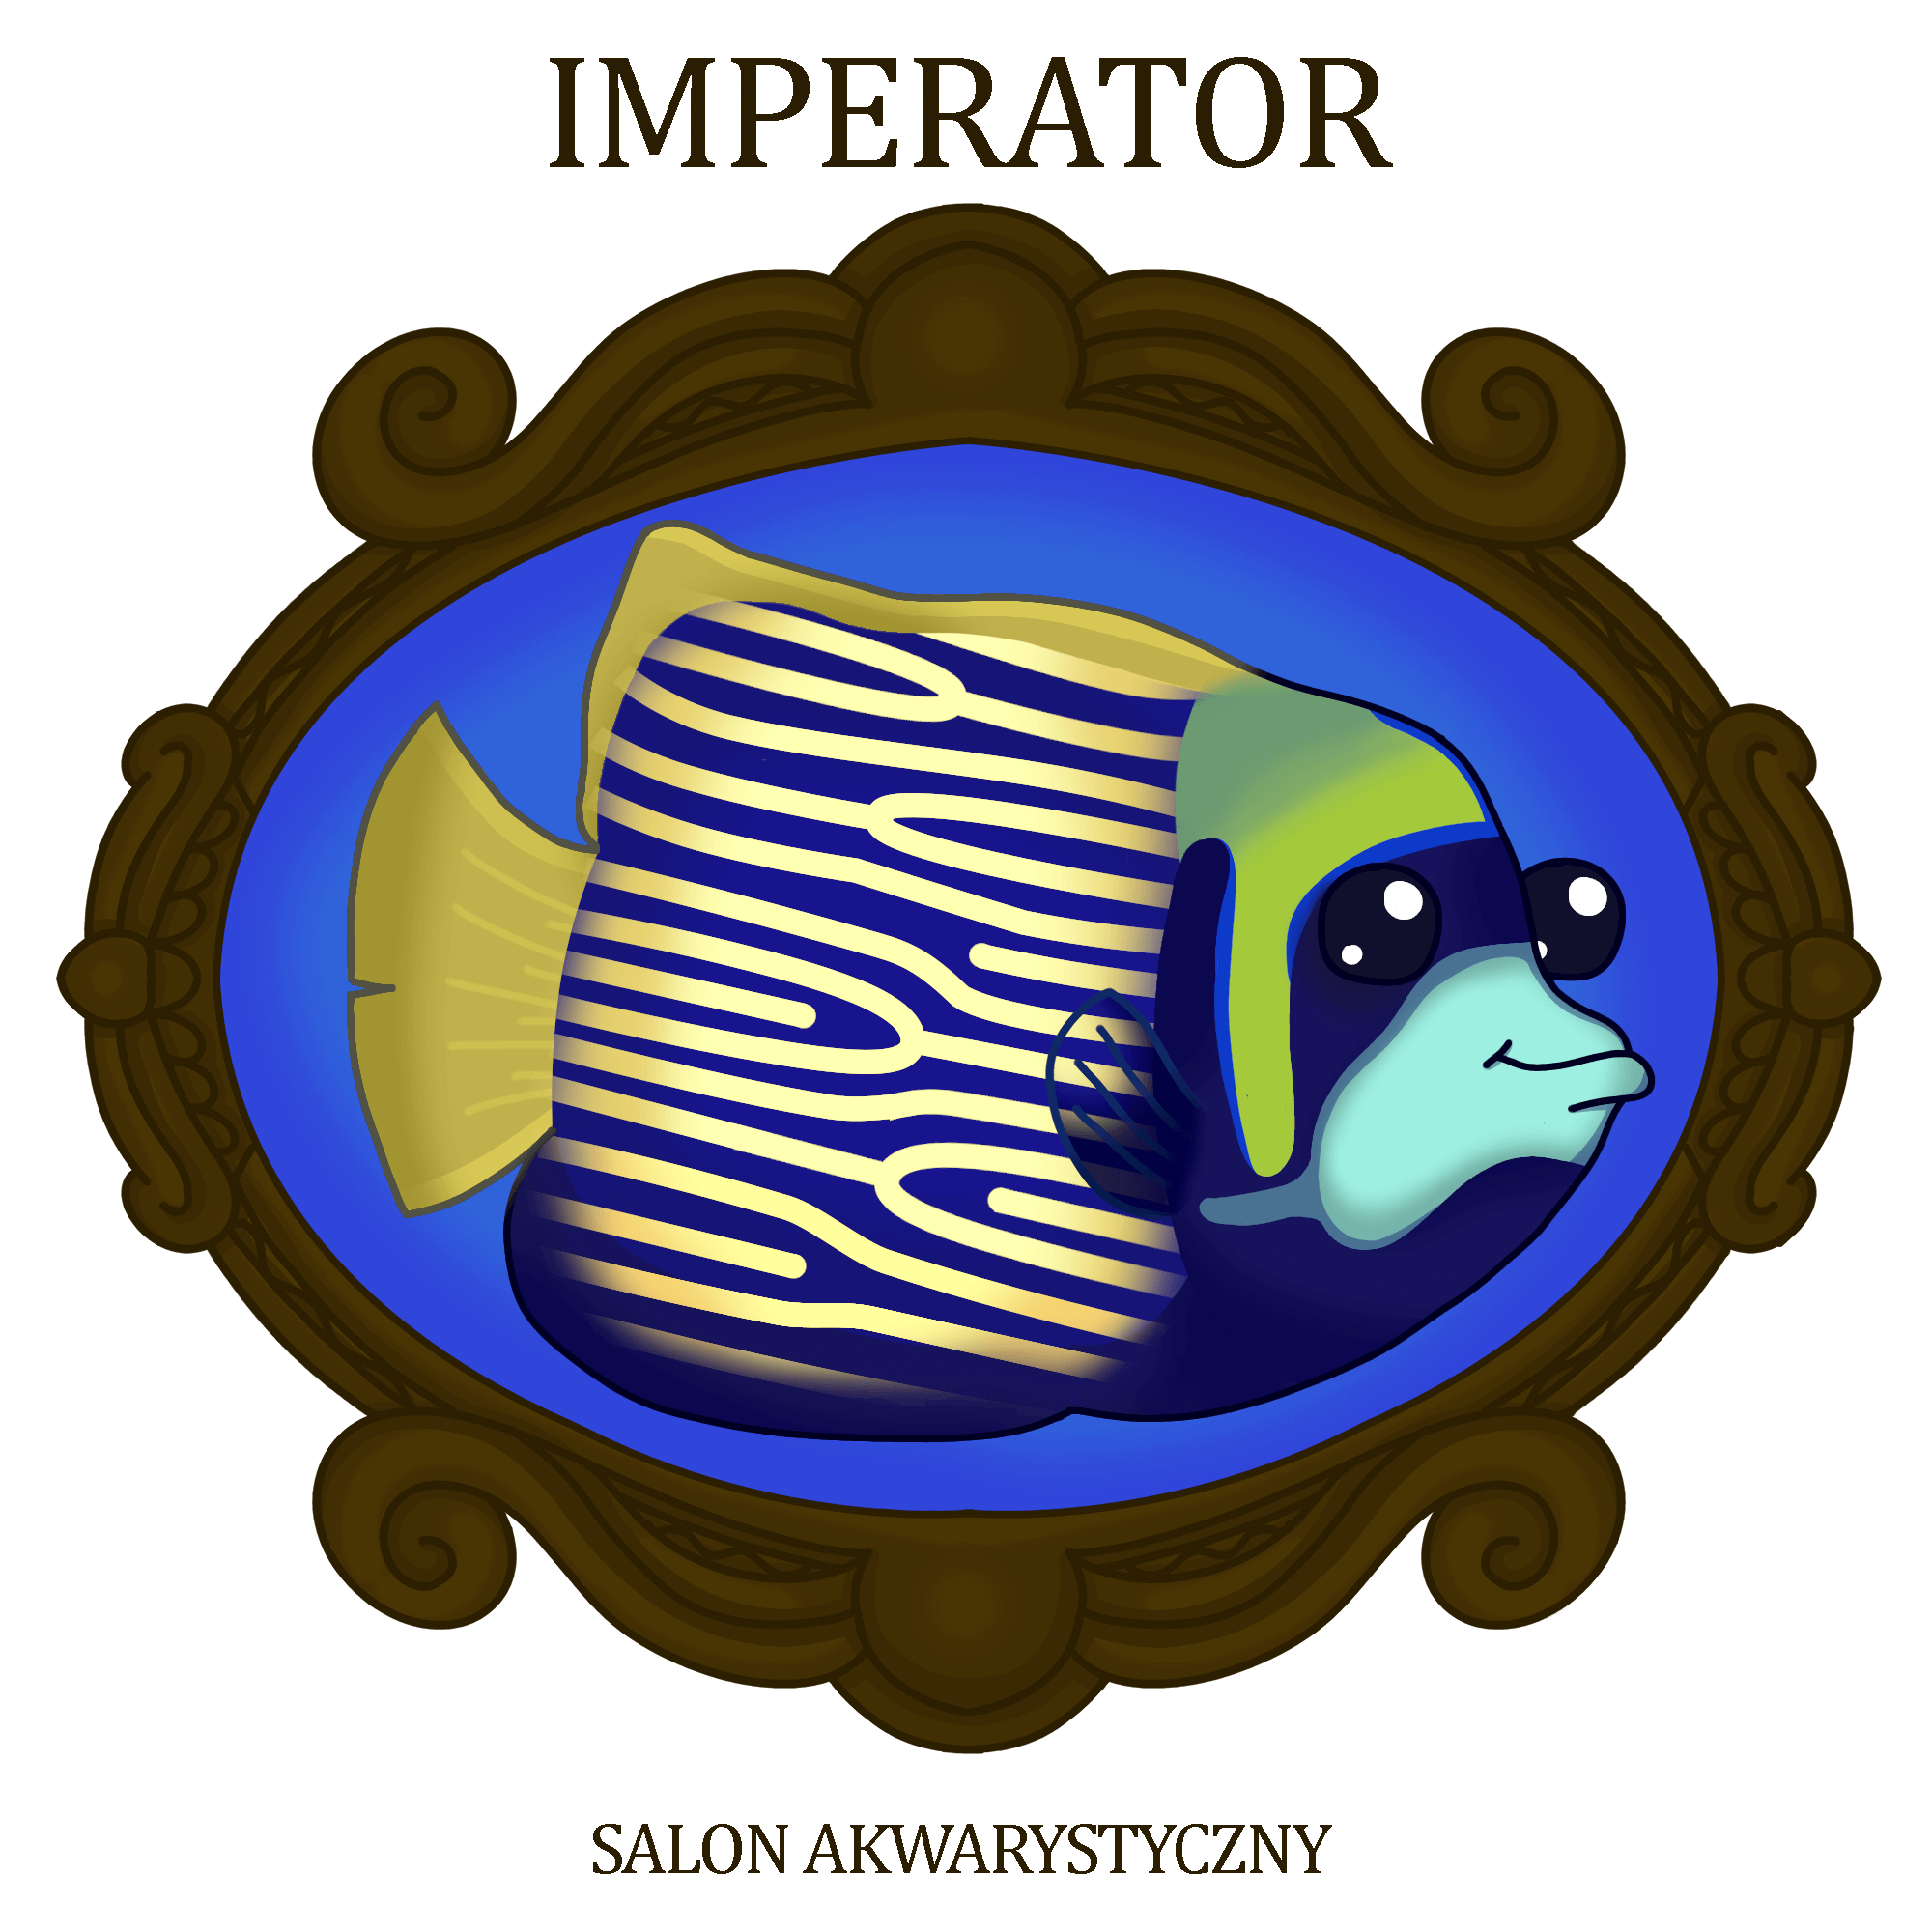 Sklep Akwarystyczny "Imperator"